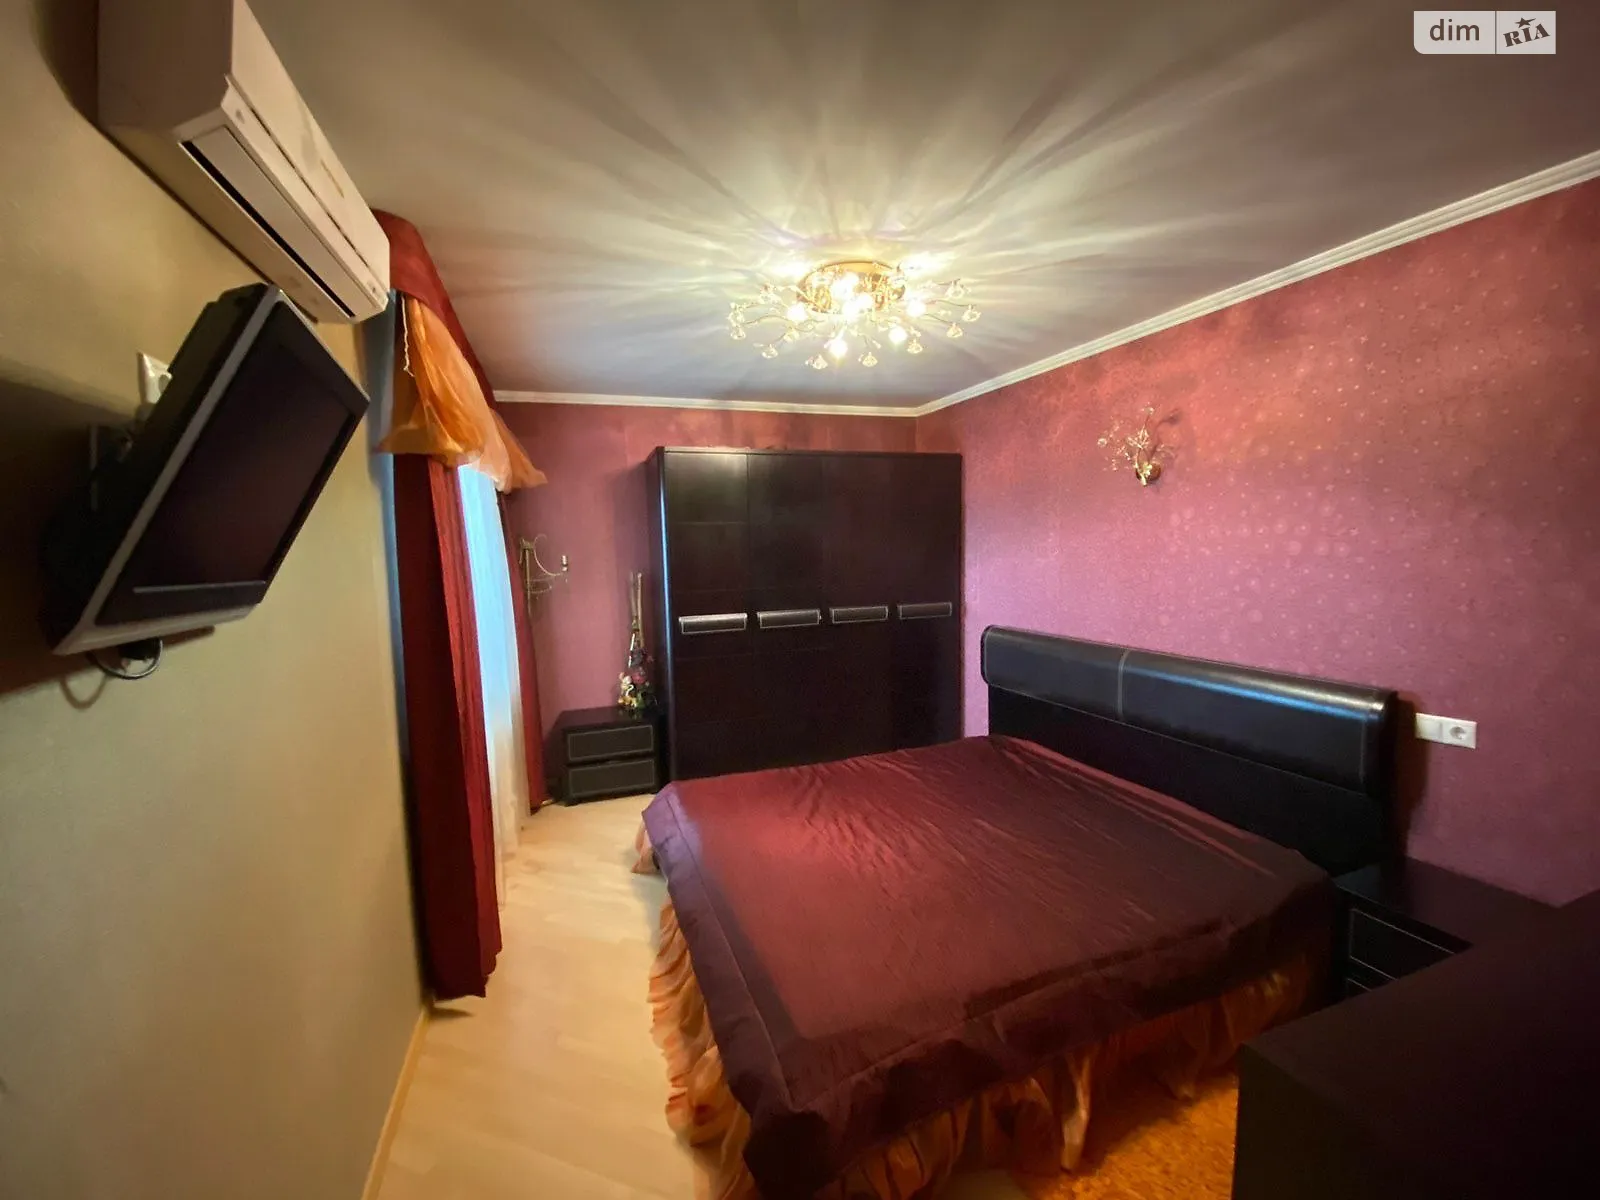 4-кімнатна квартира 88 кв. м у Луцьку, цена: 85000 $ - фото 1